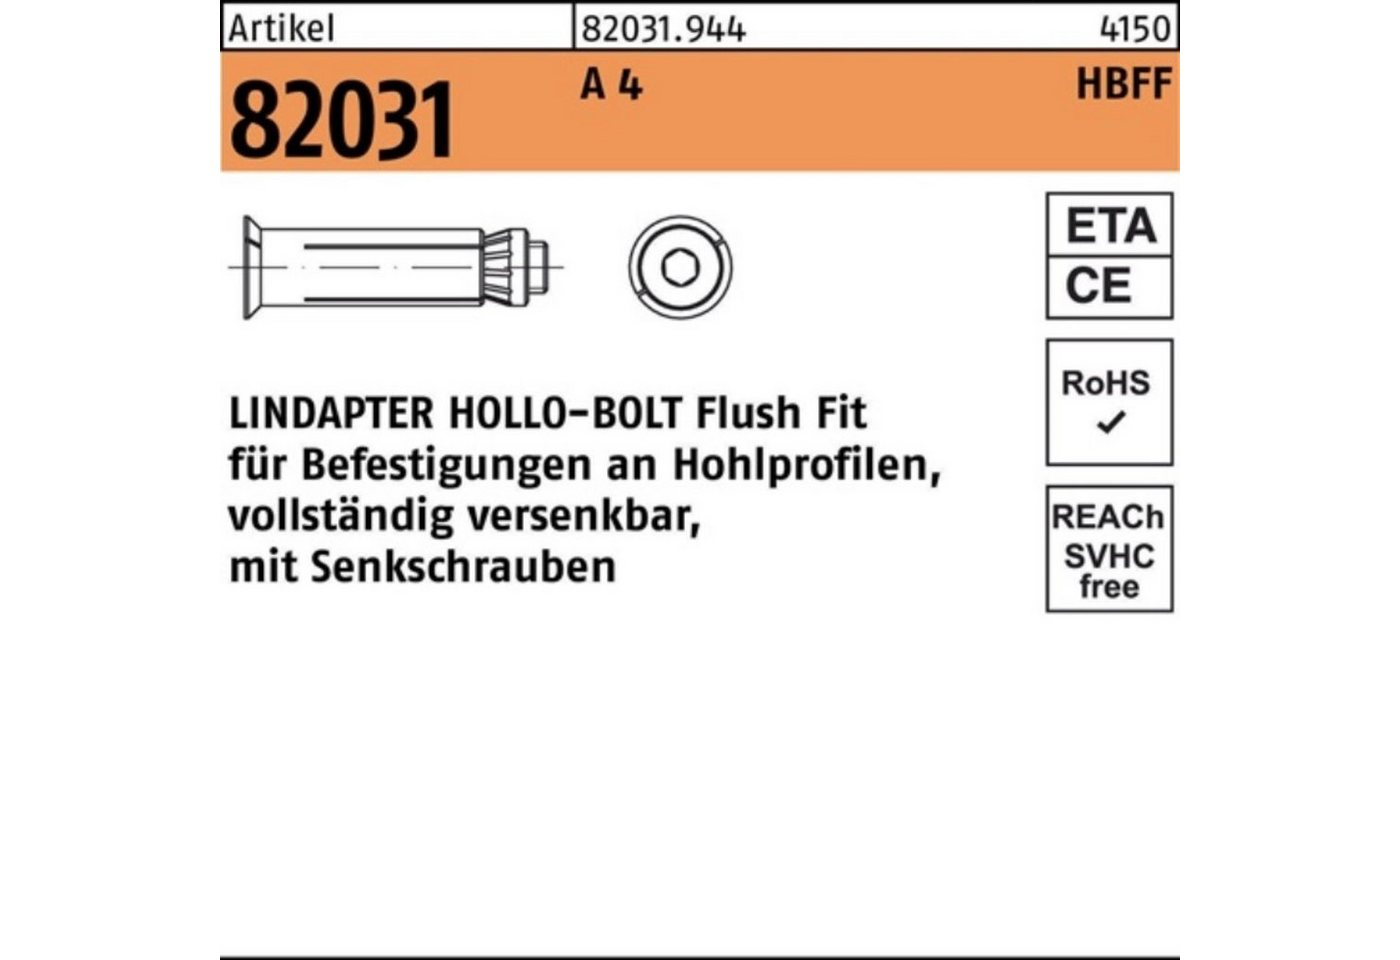 Lindapter Hohlraumdübel 100er Pack Hohlraumdübel R 82031 HBFF 08-3 (90/64) A 4 1 Stück Arti von Lindapter